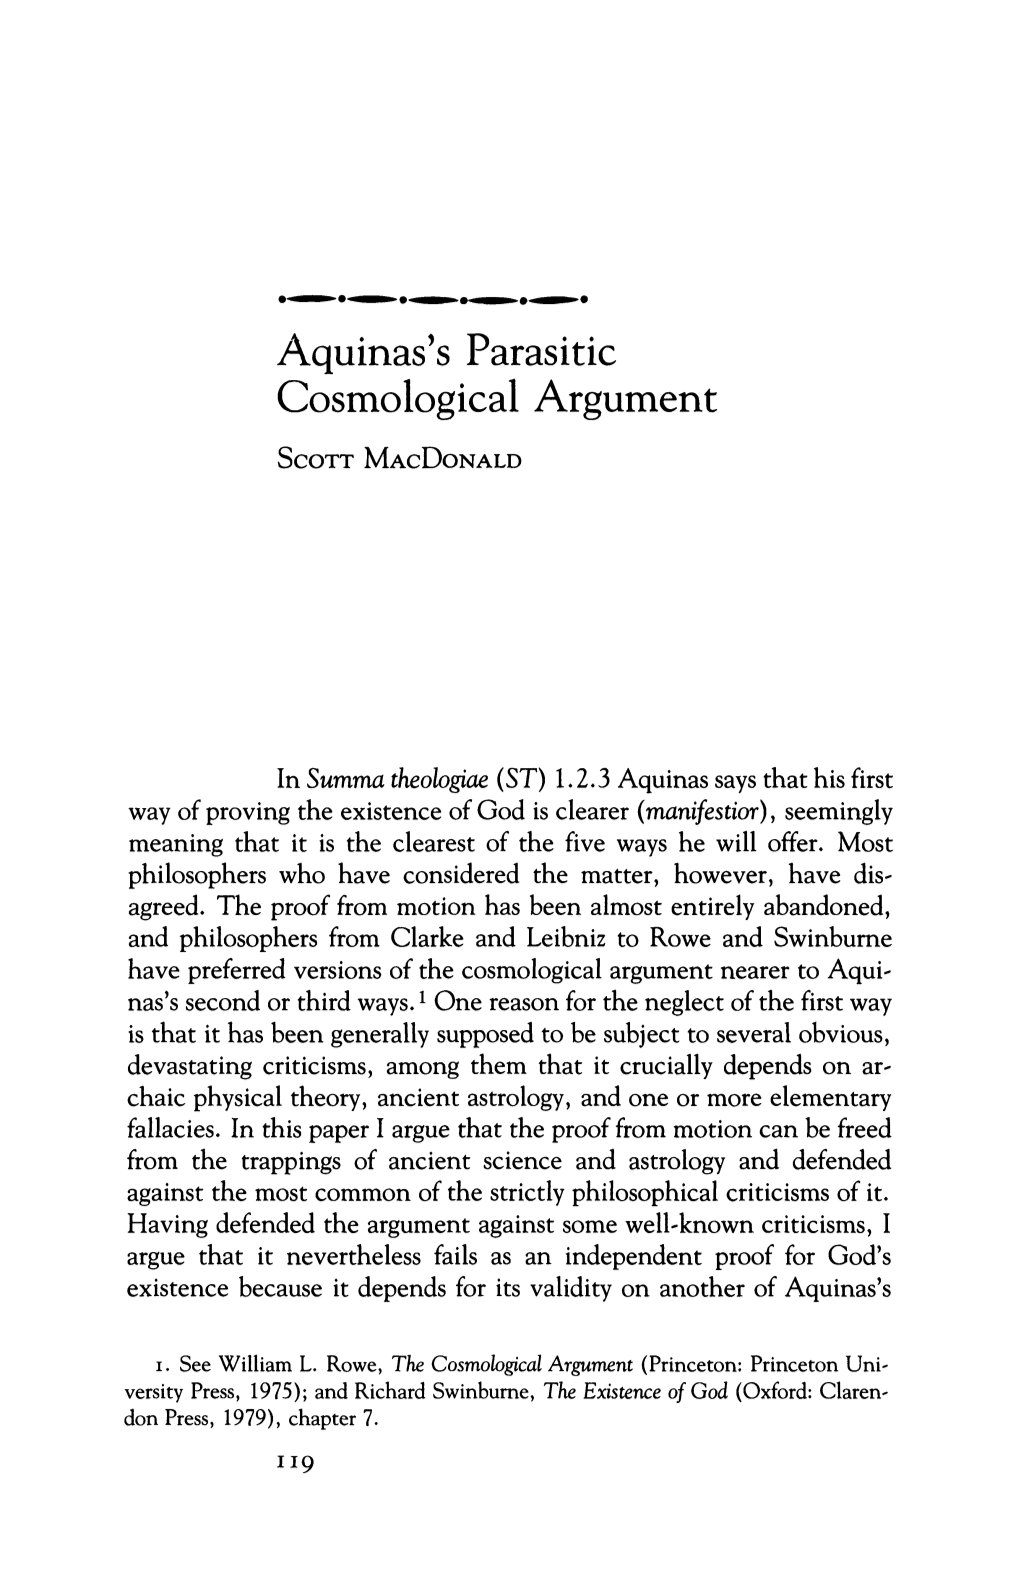 Aquinas's Parasitic Cosmological Argument